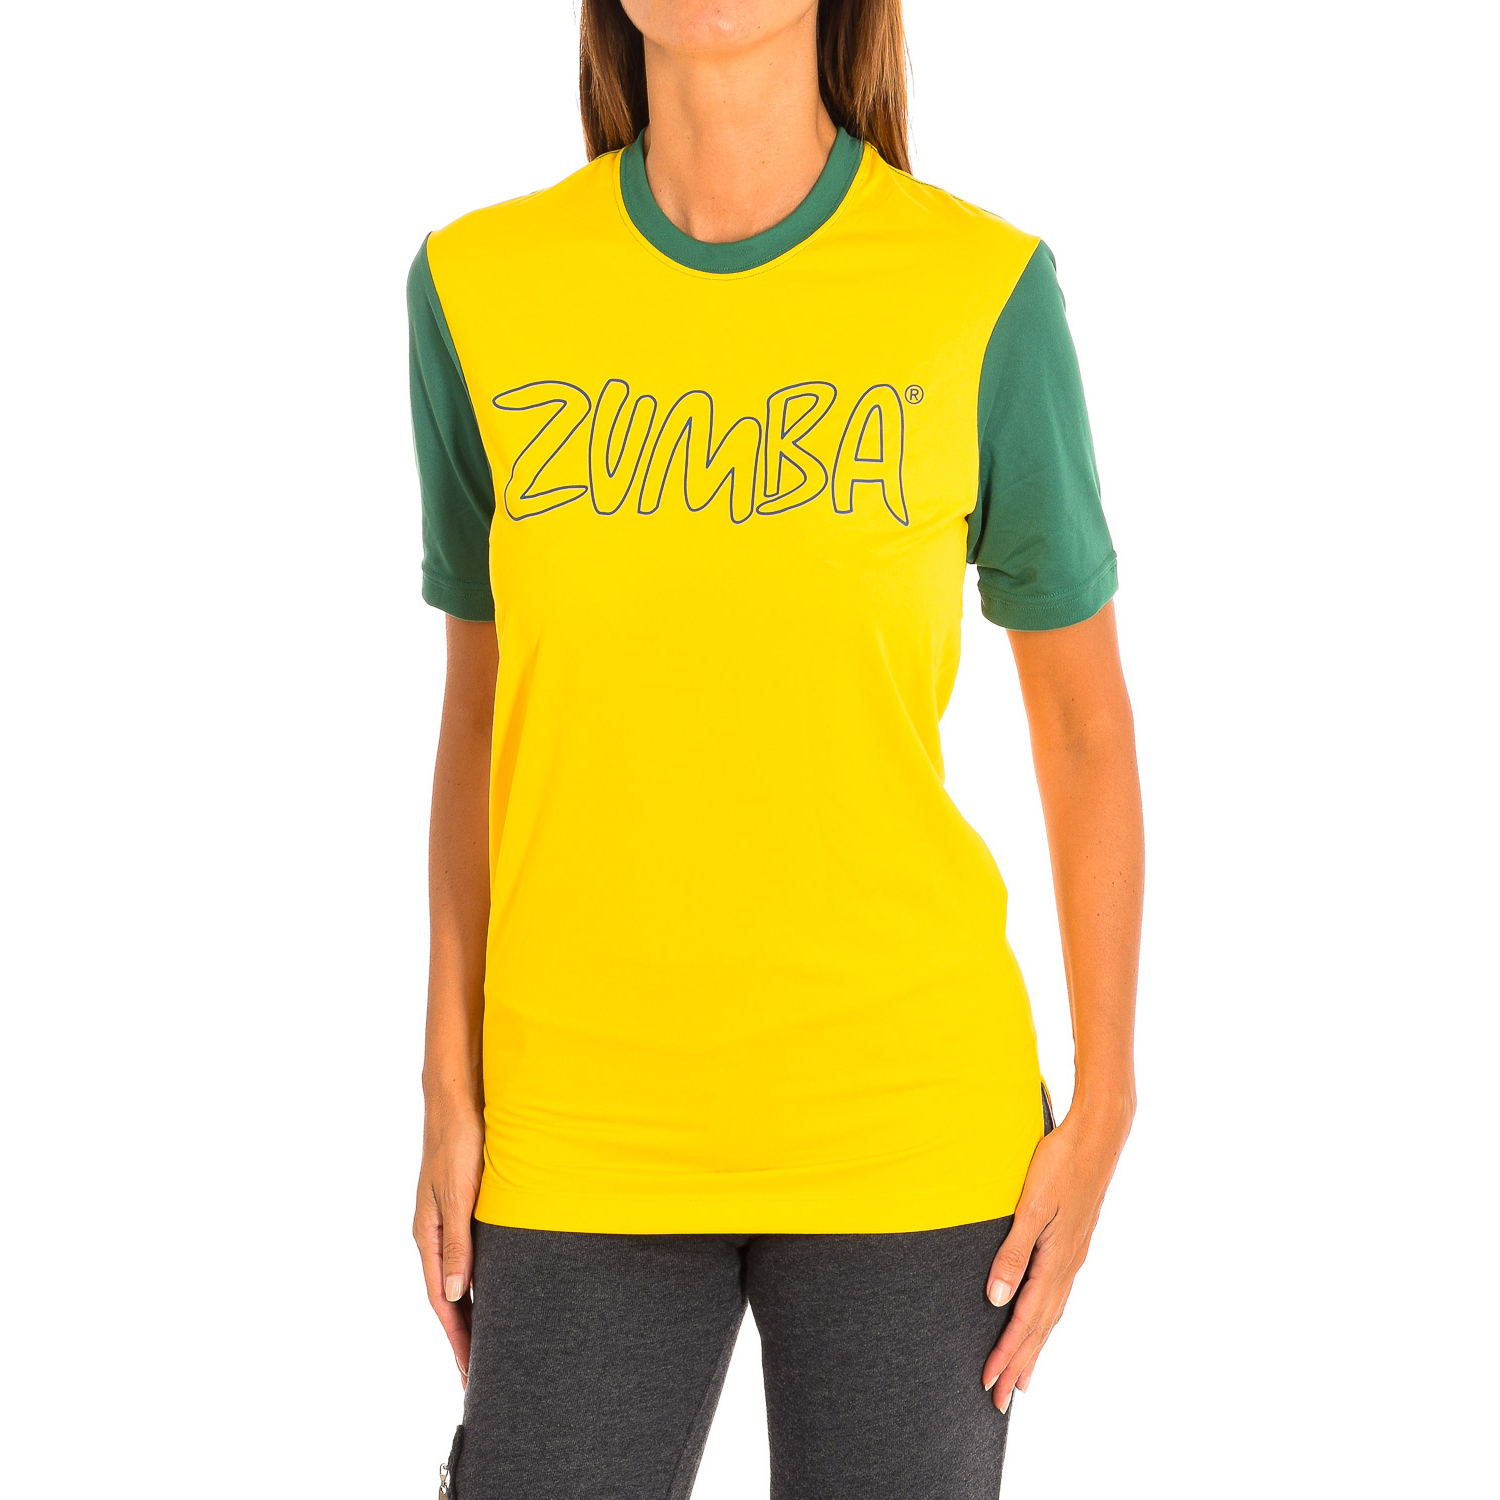 Tshirt Esportiva Feminina Com Mangas Z2t00147 - amarillo-verde - 